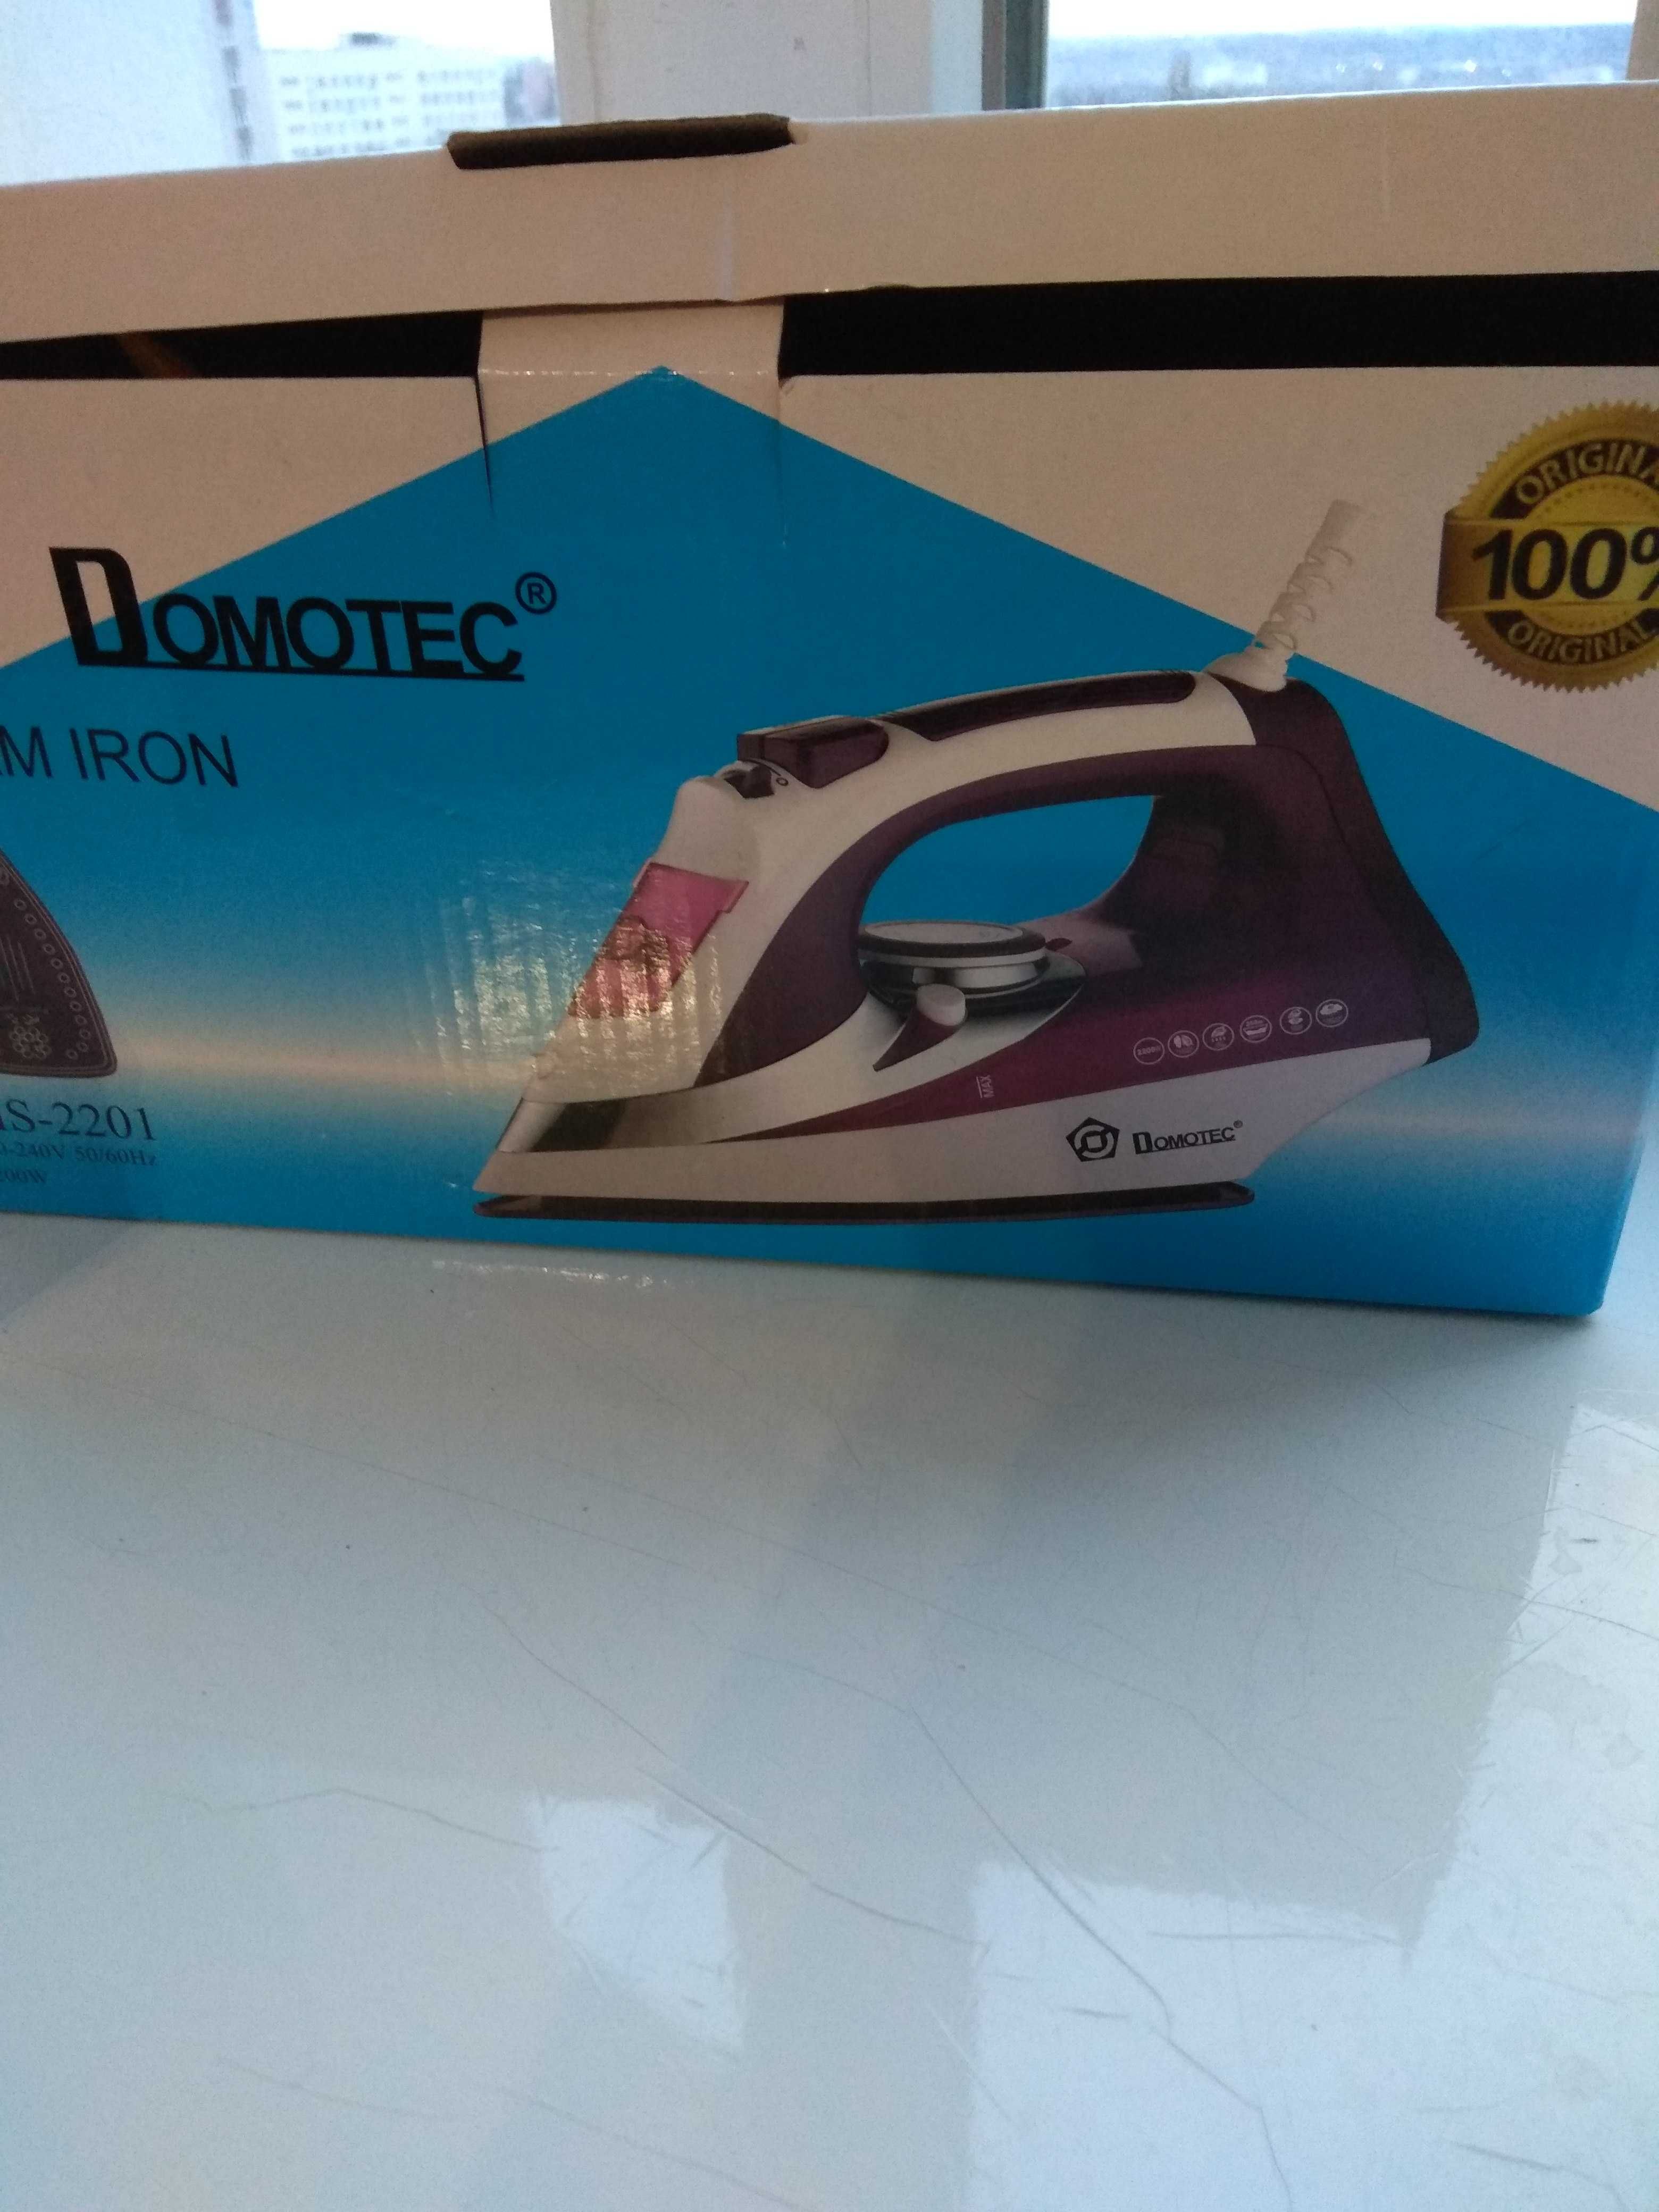 Продажа нового утюга Domotec с паром за 900 грн.